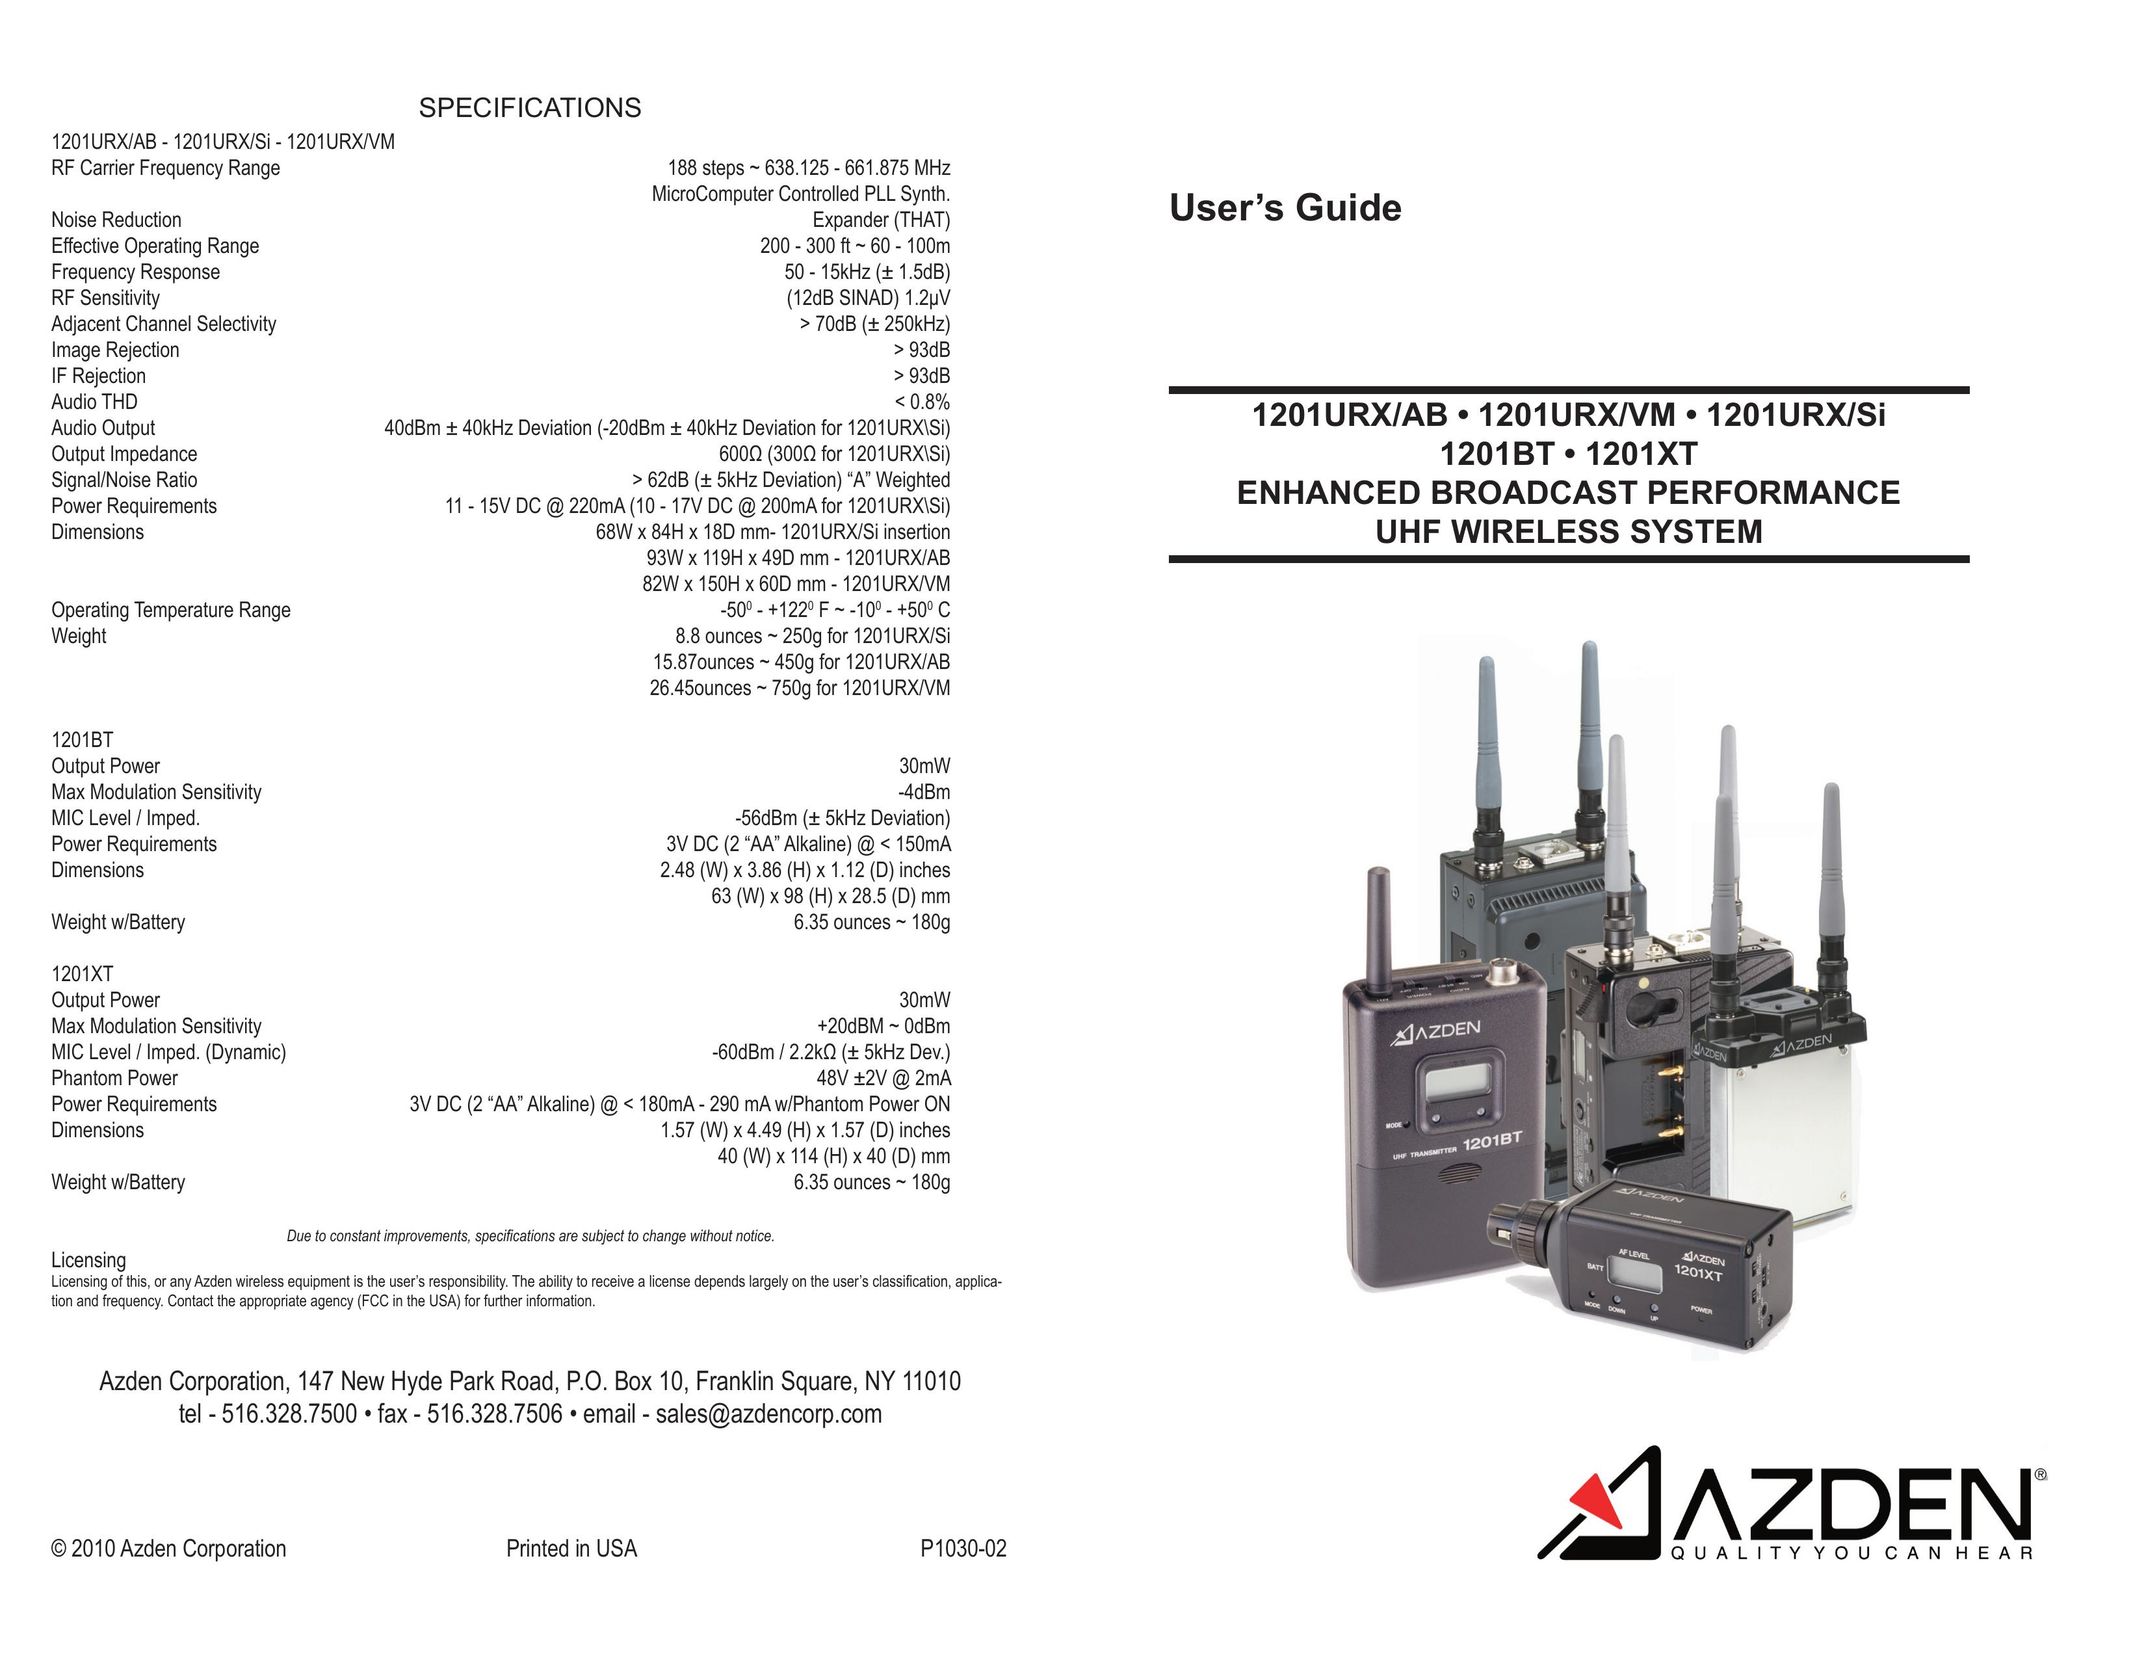 Azden 1201URX/VM Radio User Manual